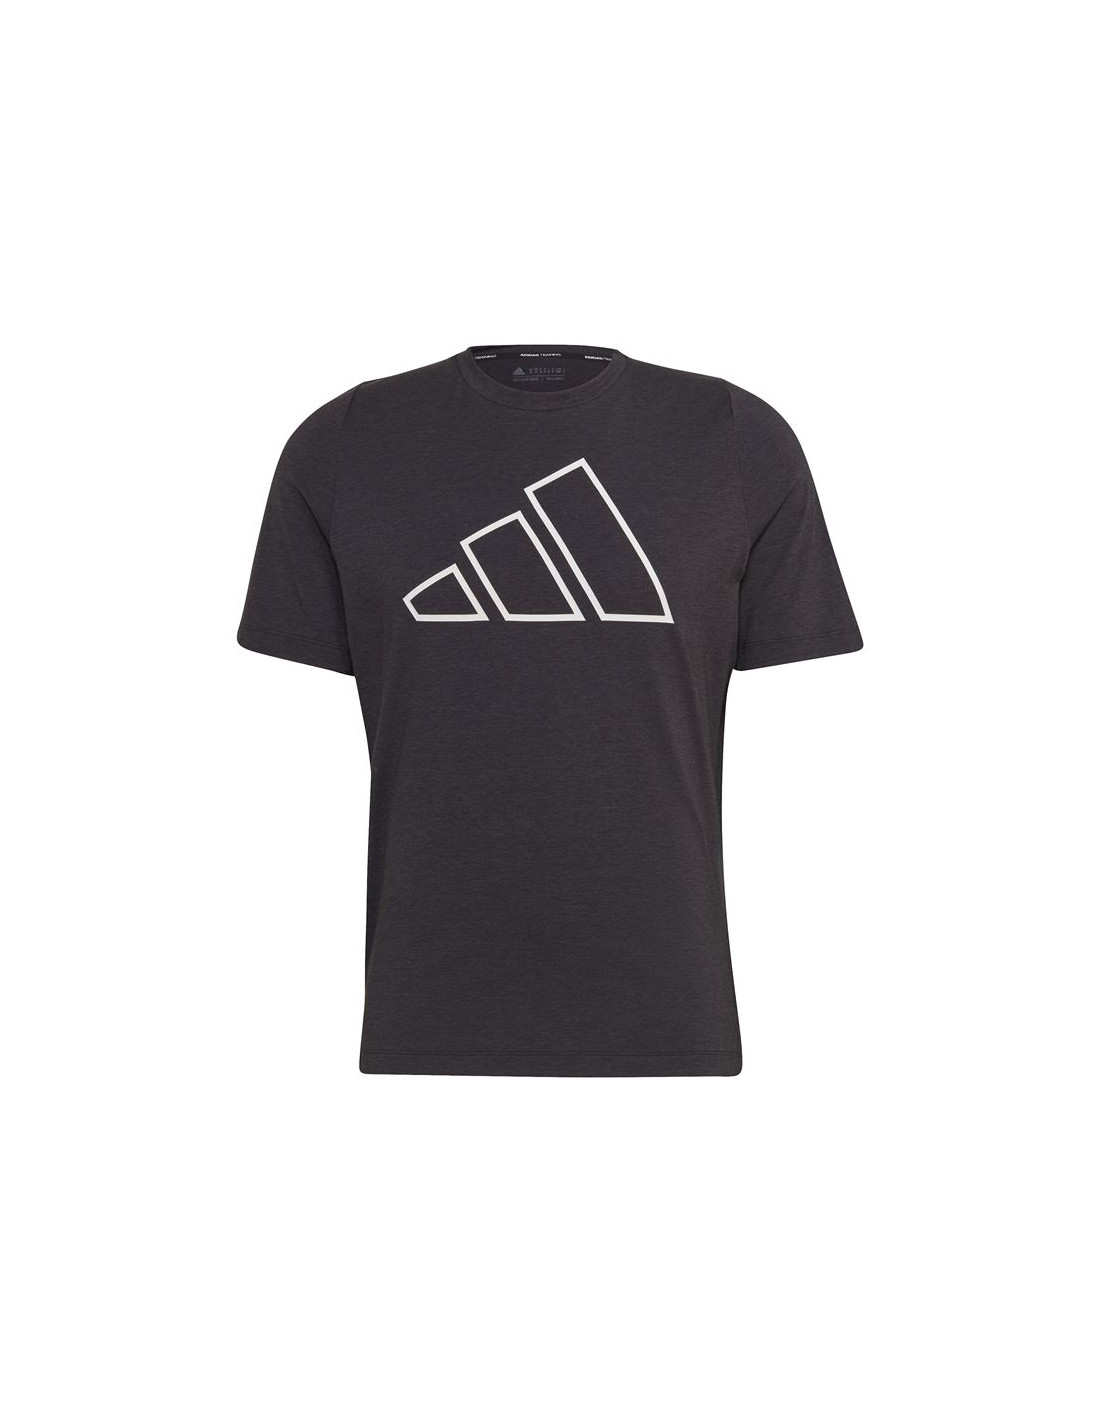 Camiseta adidastrain icons hombre black